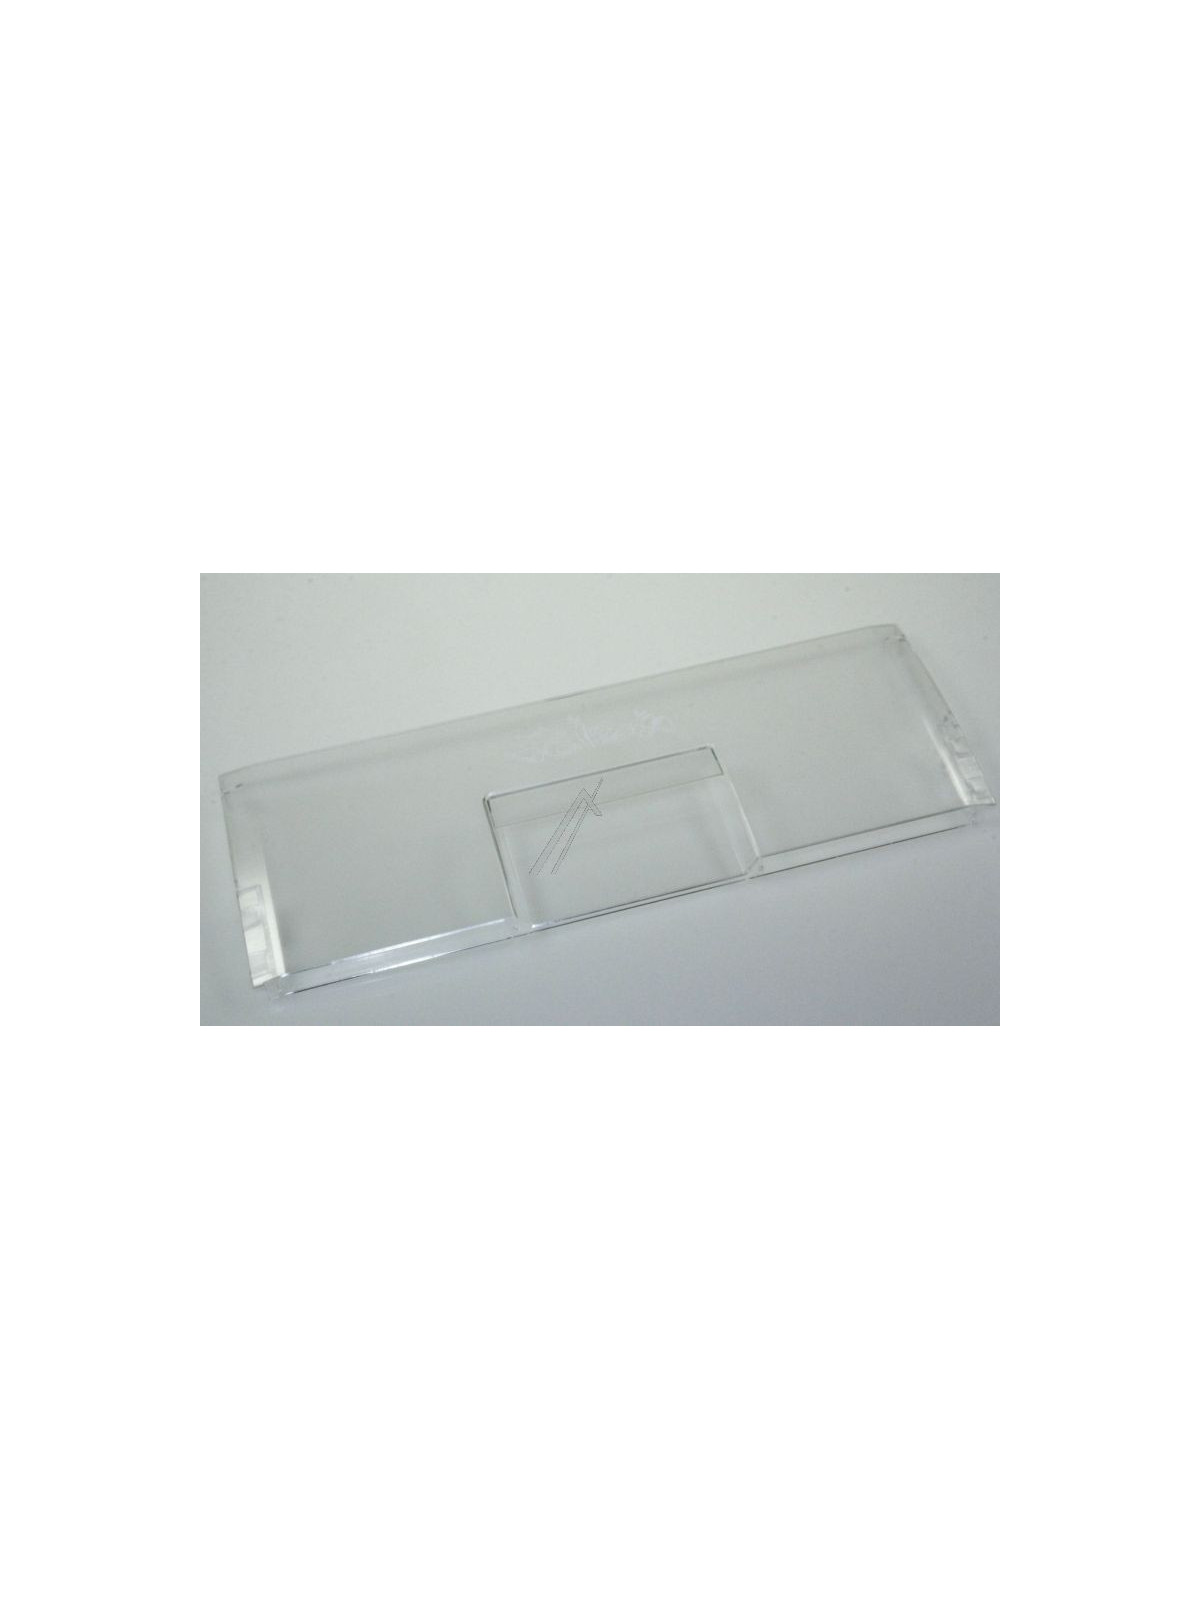 Façade tiroir congélateur Beko BU1201 - Réfrigérateur